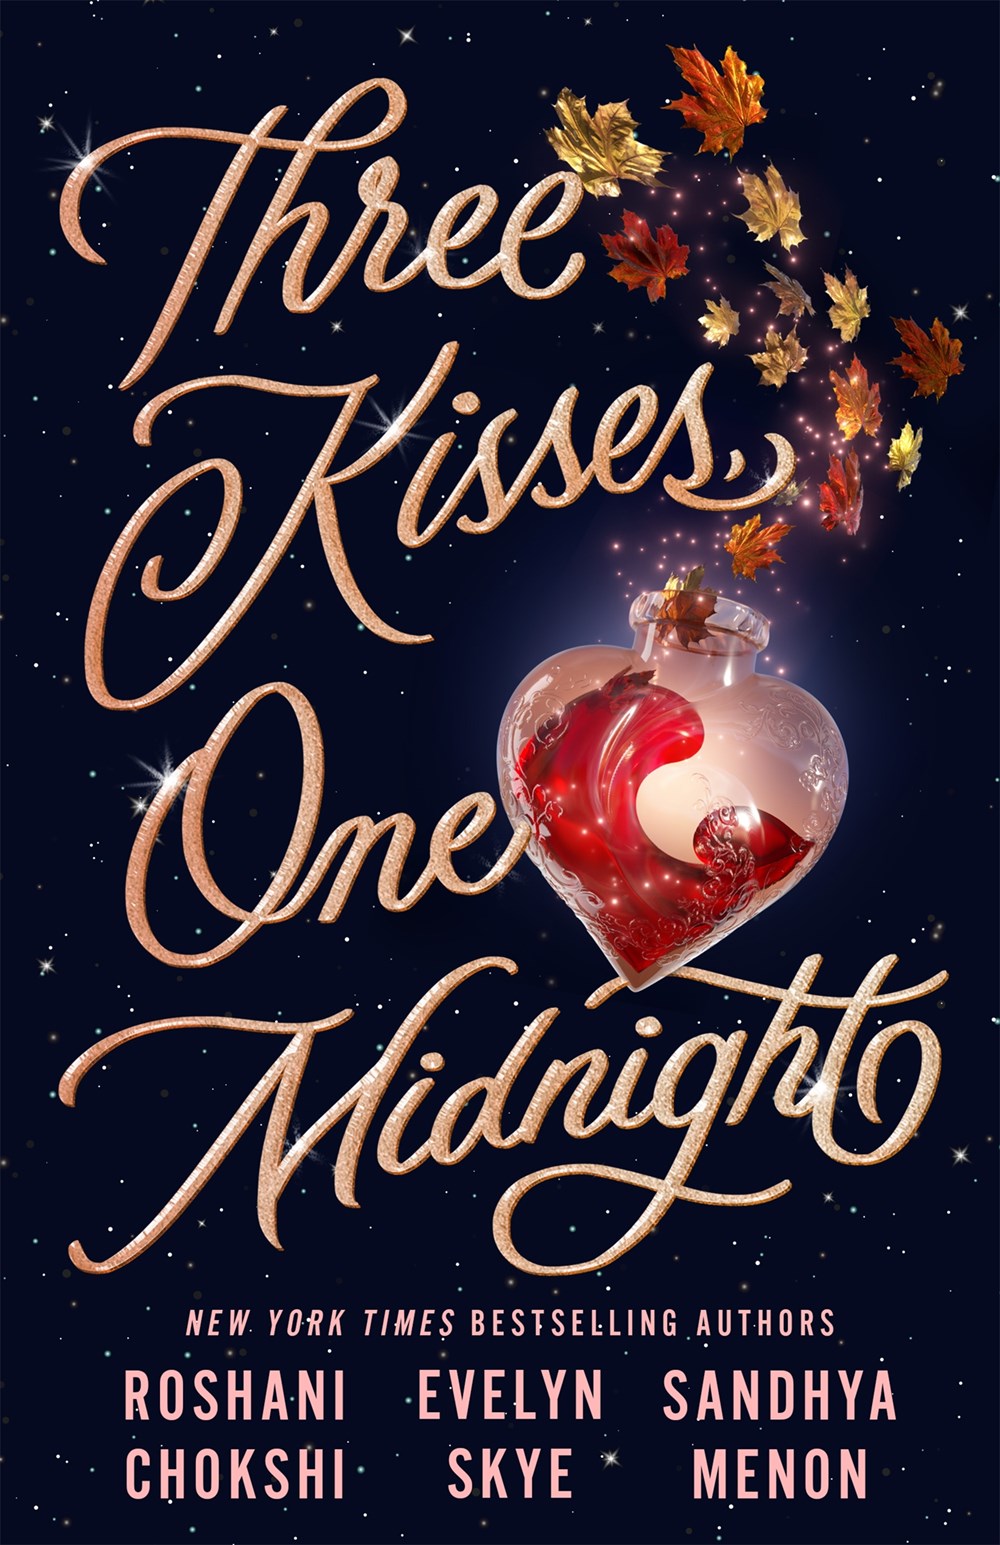 Three Kisses, One Midnight-Paperback